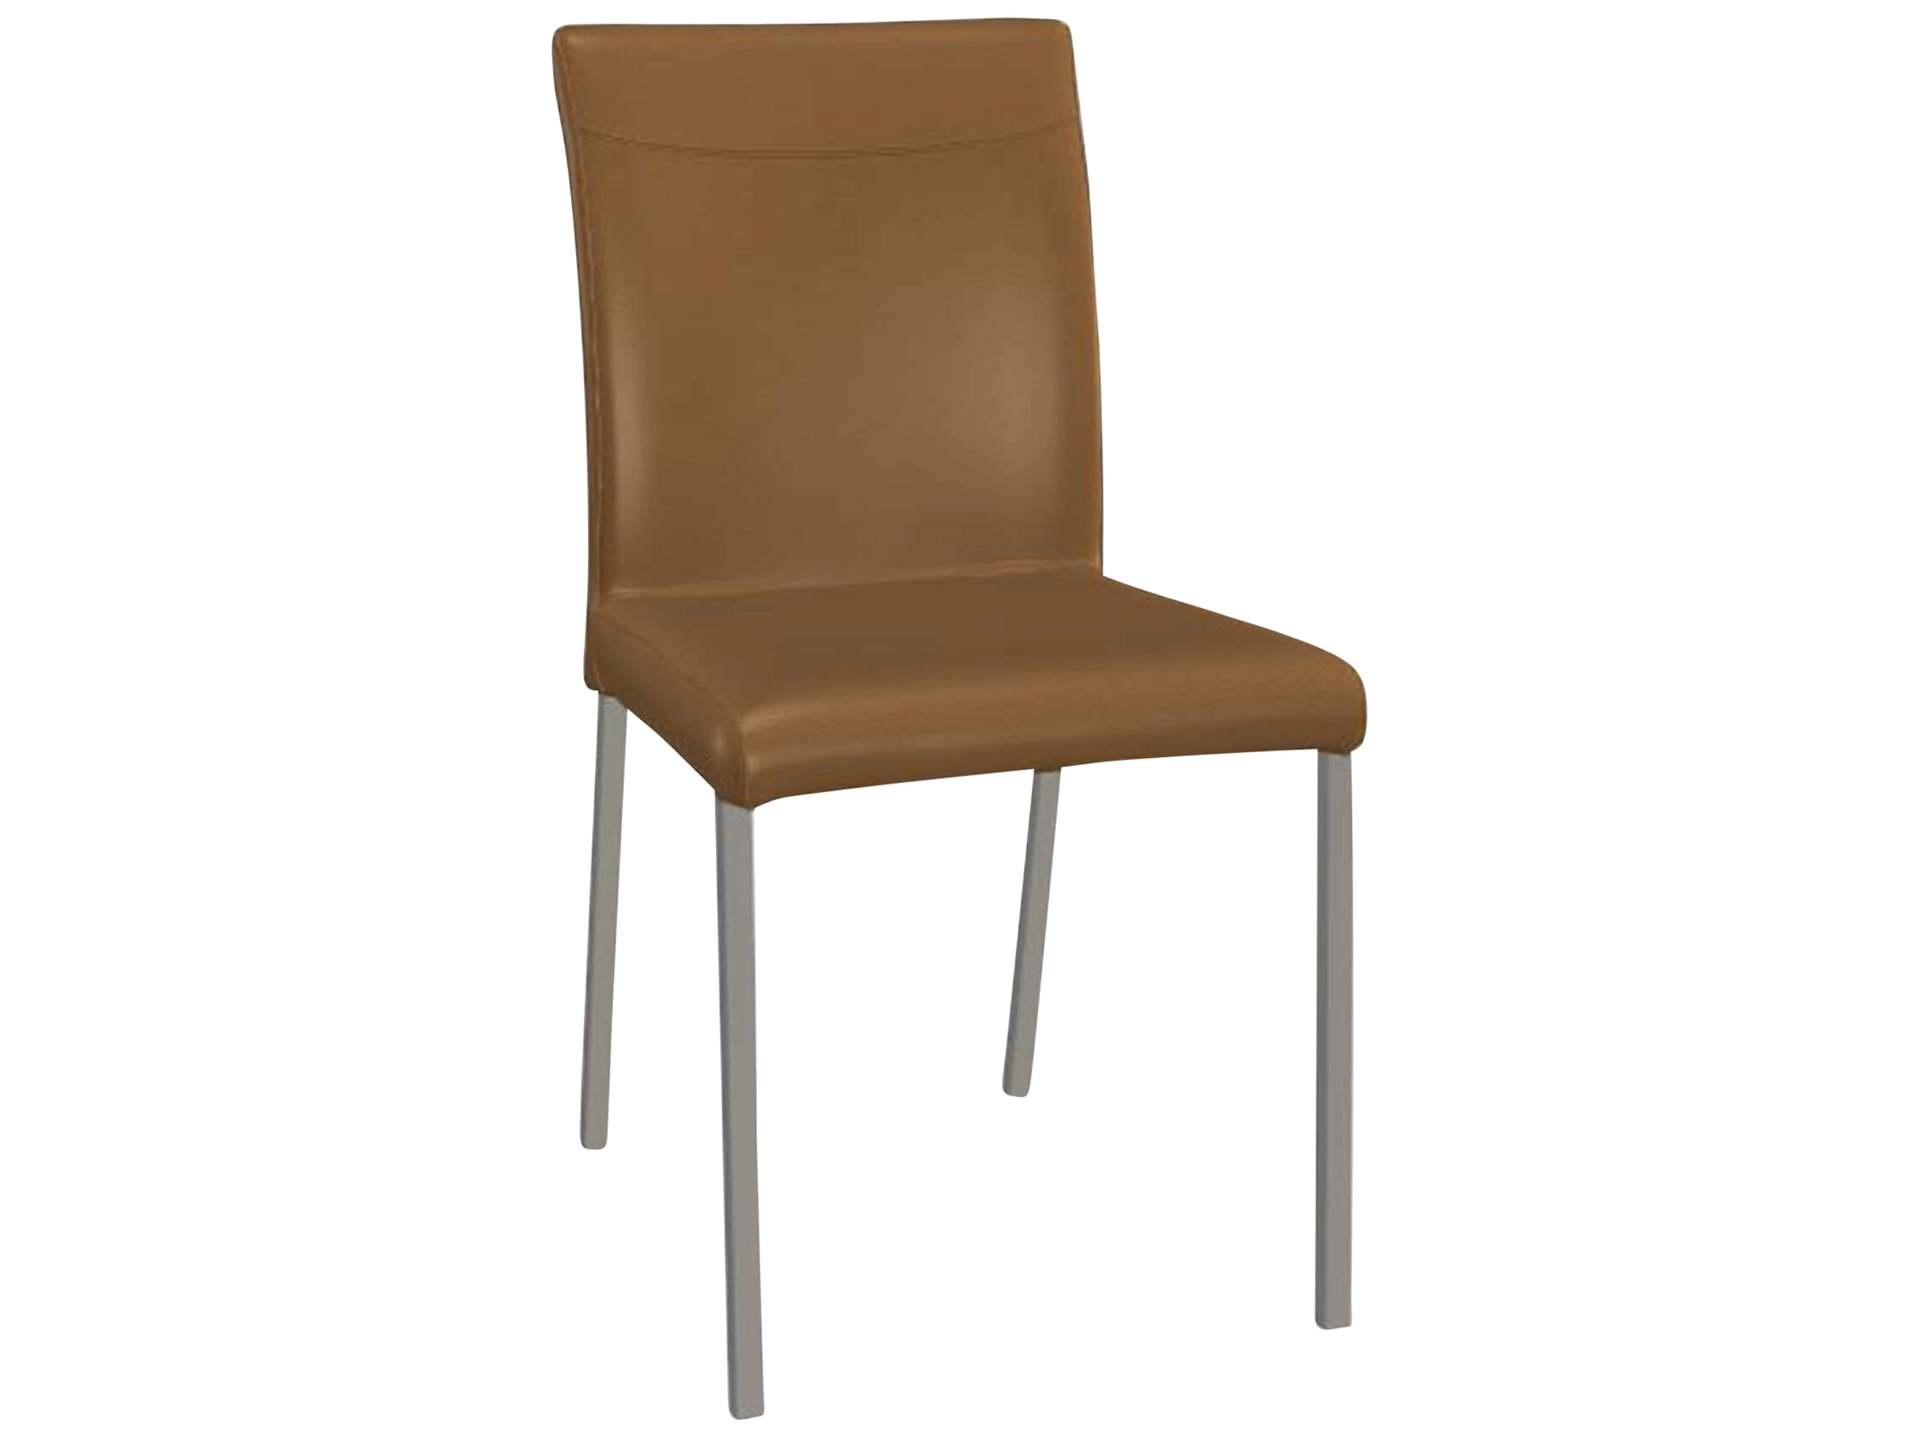 Stuhl Leicht Premium Trendstühle / Farbe: Camel / Material: Leder